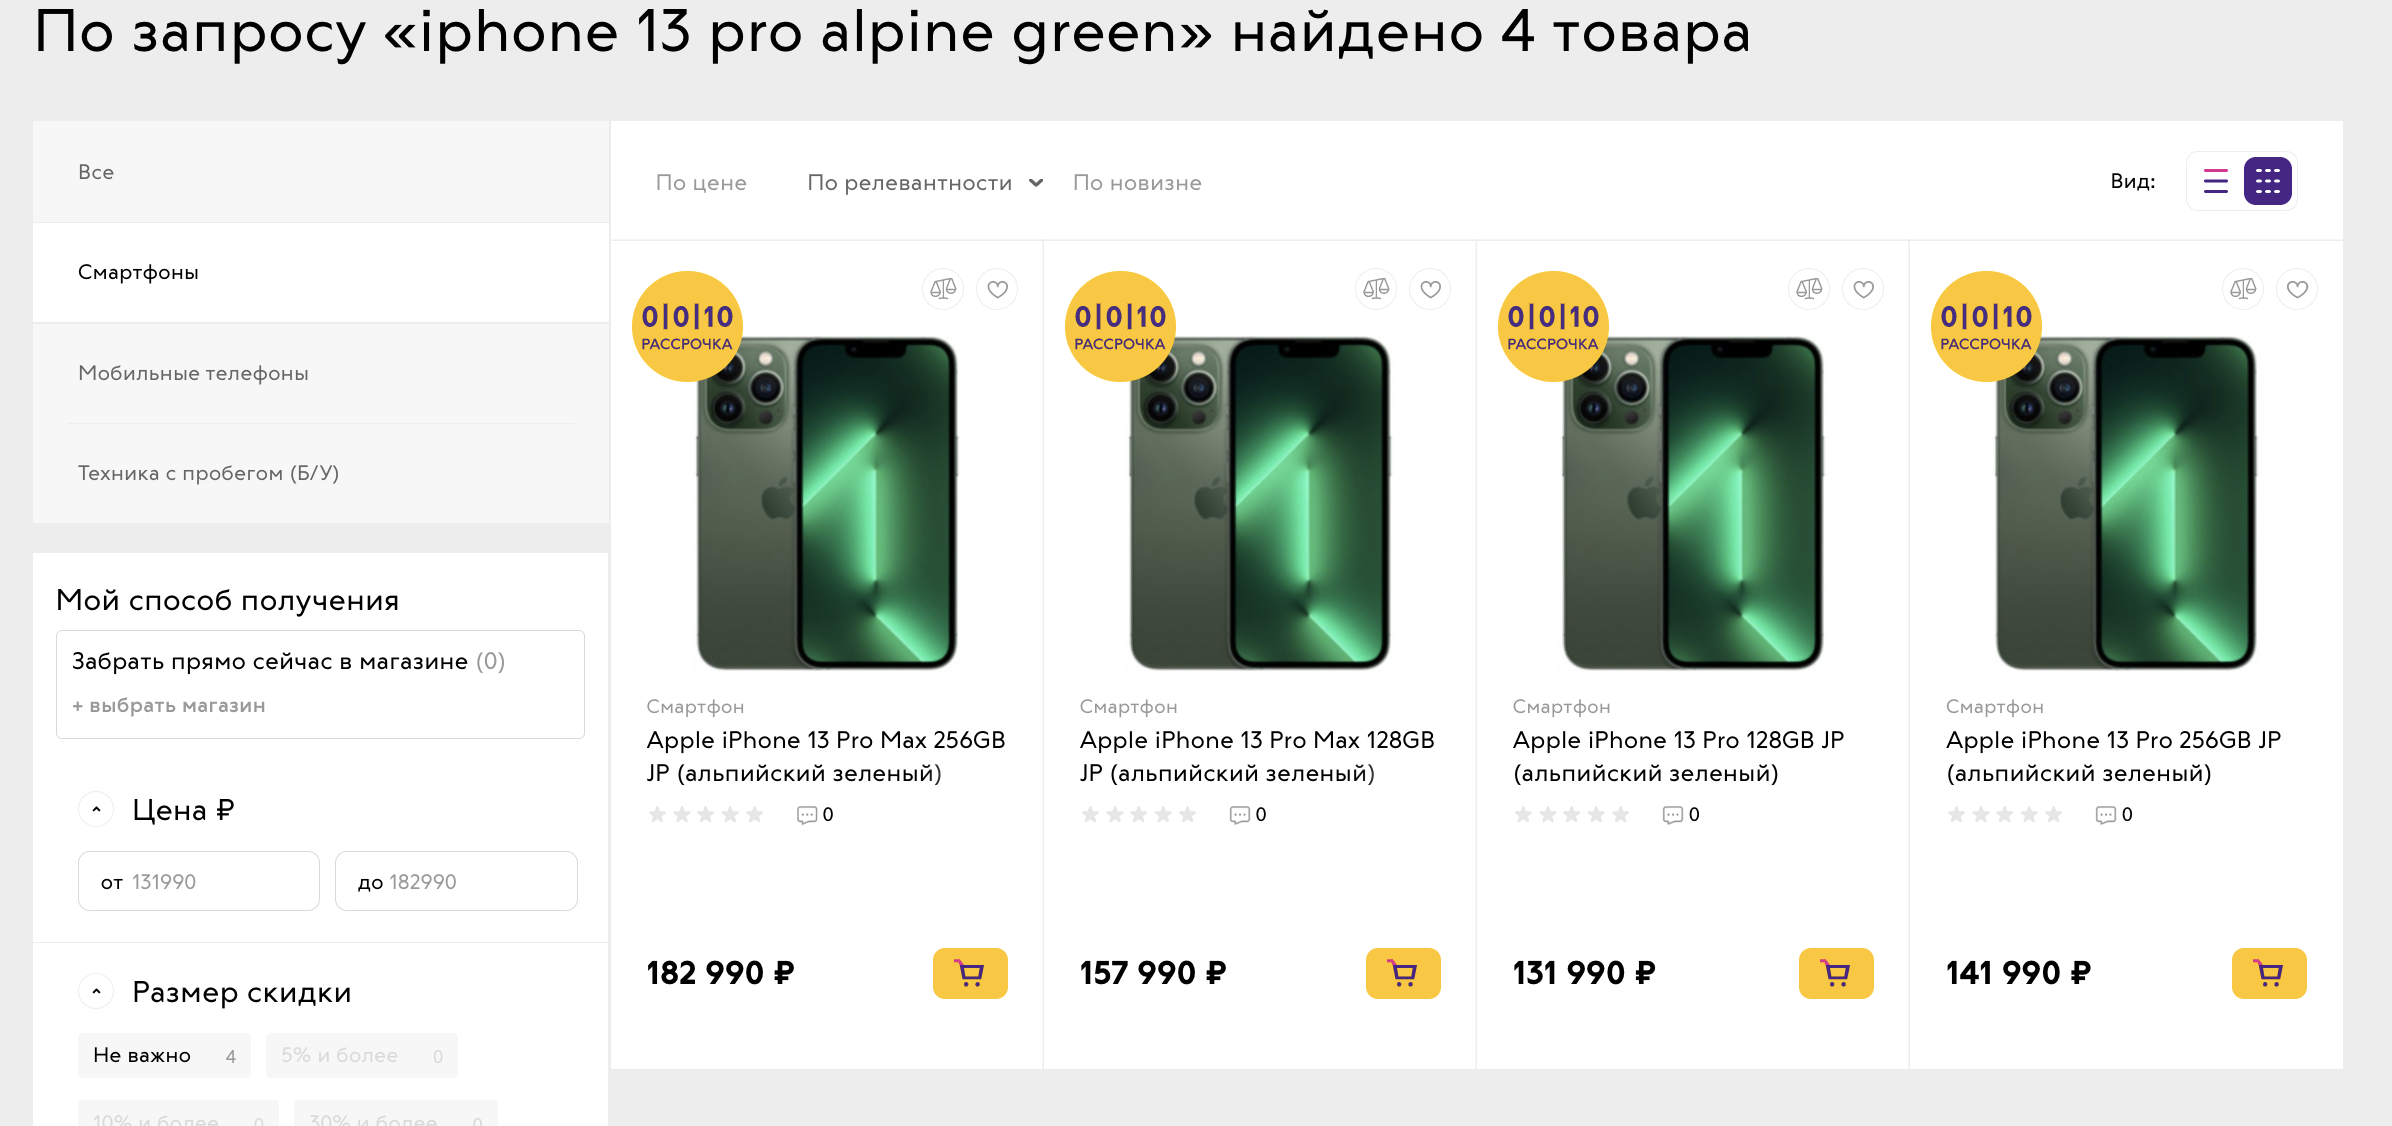 Отличие 13 от 13 про. Айфон 13 про Макс зеленый. Iphone 13 Alpine Green. Iphone 13 Pro Альпина Грин. Iphone 13 Pro Max зеленый и iphone 13 Pro зеленый.